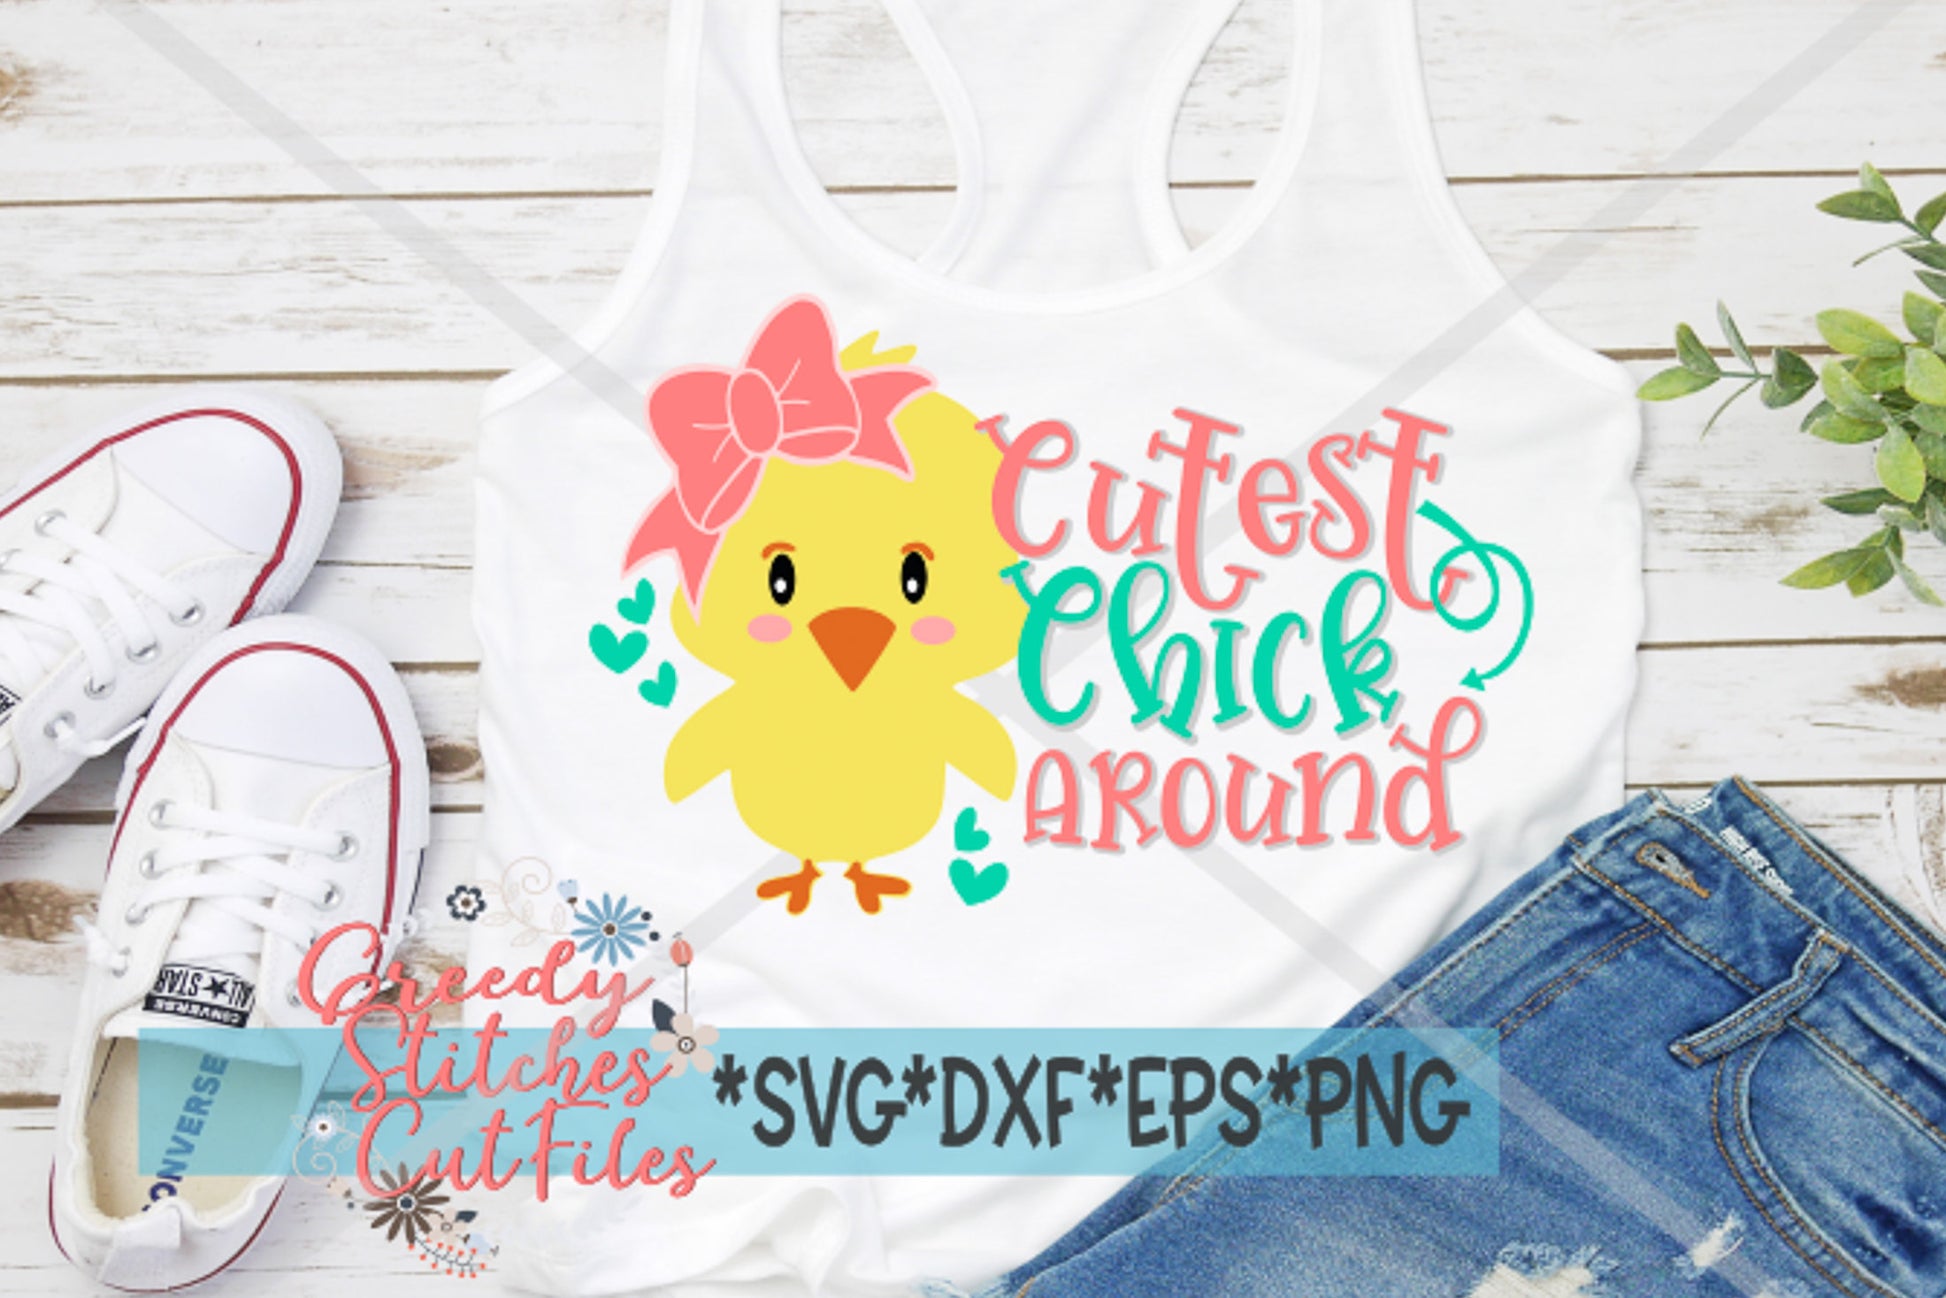 Easter SvG | Cutest Chick Around svg, dxf, eps, png. Easter SvG | Chick SvG | Cutest Chick SvG | Easter Girl SvG | Instant Download Cut File